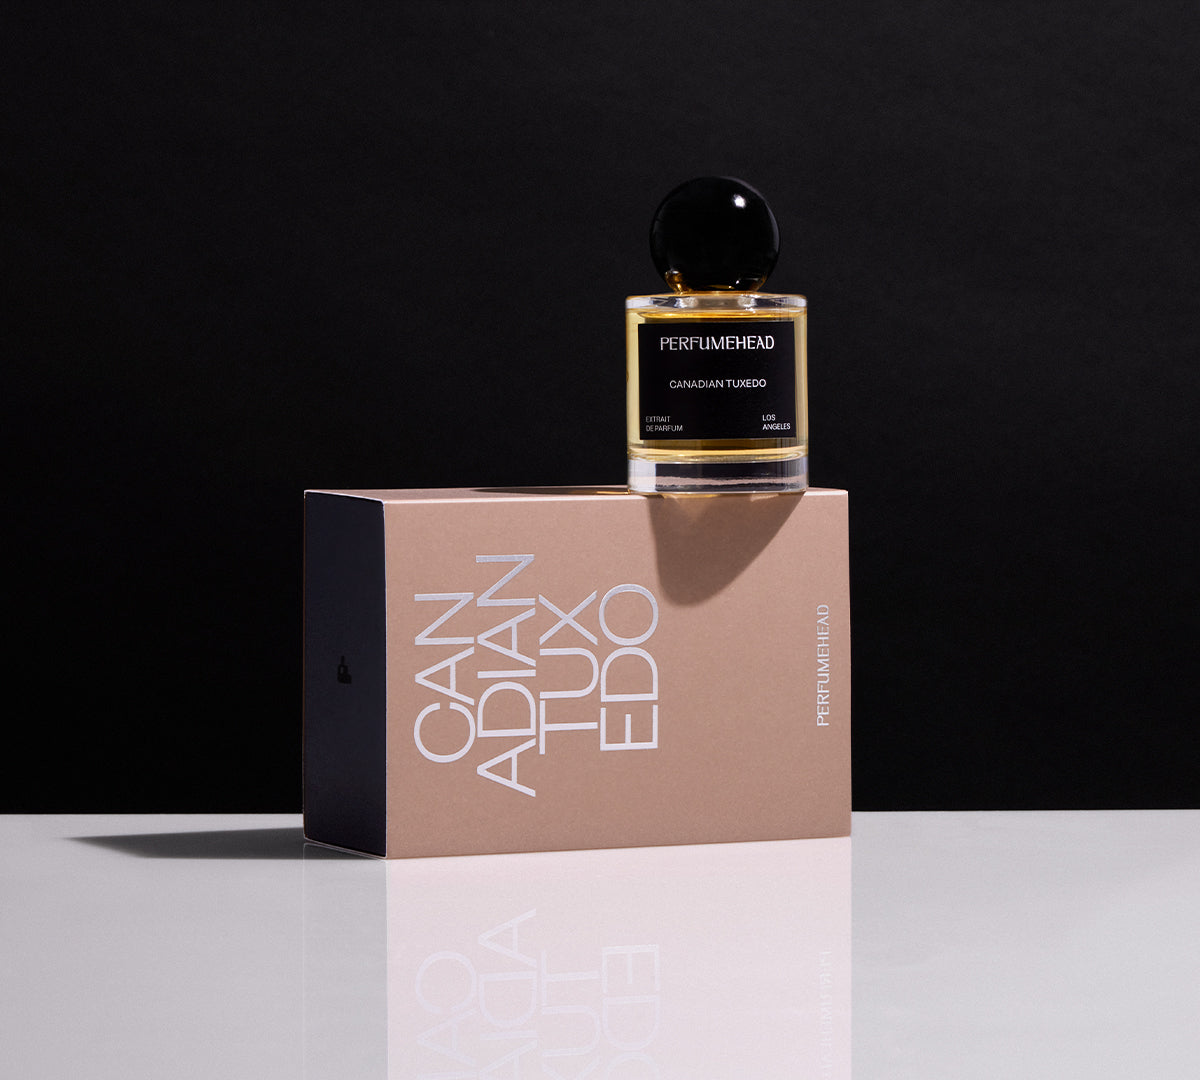 Canadian Tuxedo extrait de parfum 50m signature spray bottle and box. 